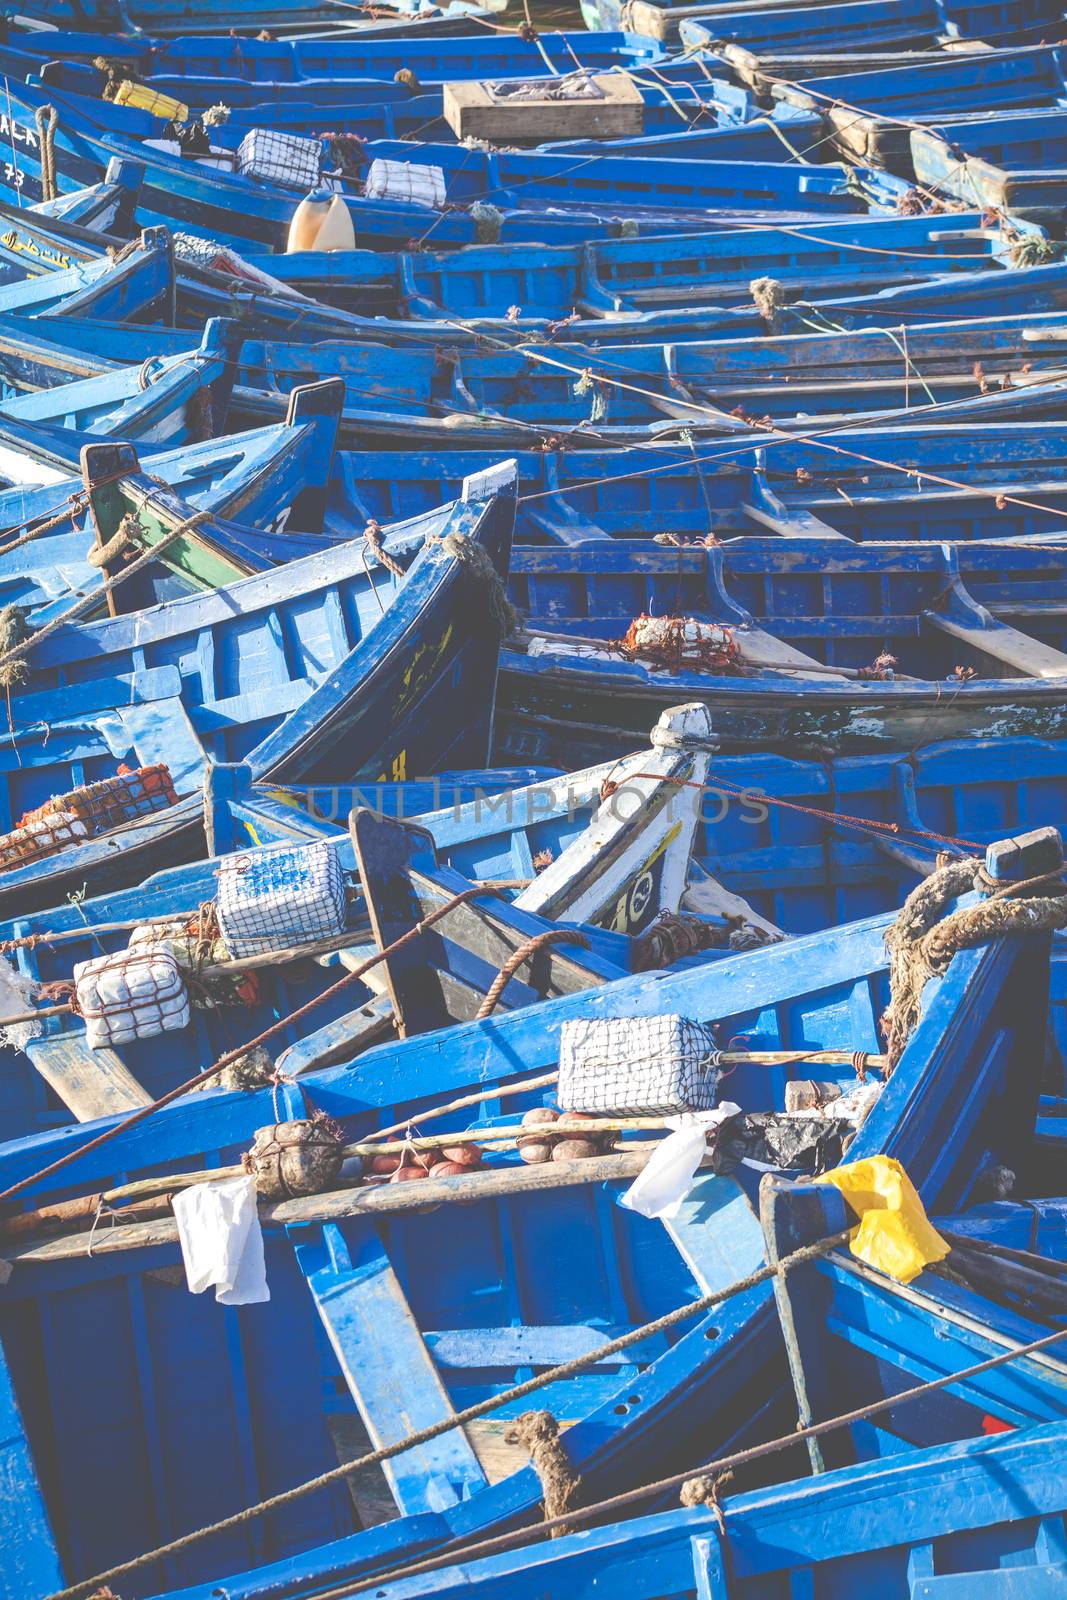 Blue fishing boats in Essaouira, Morocco, Africa

